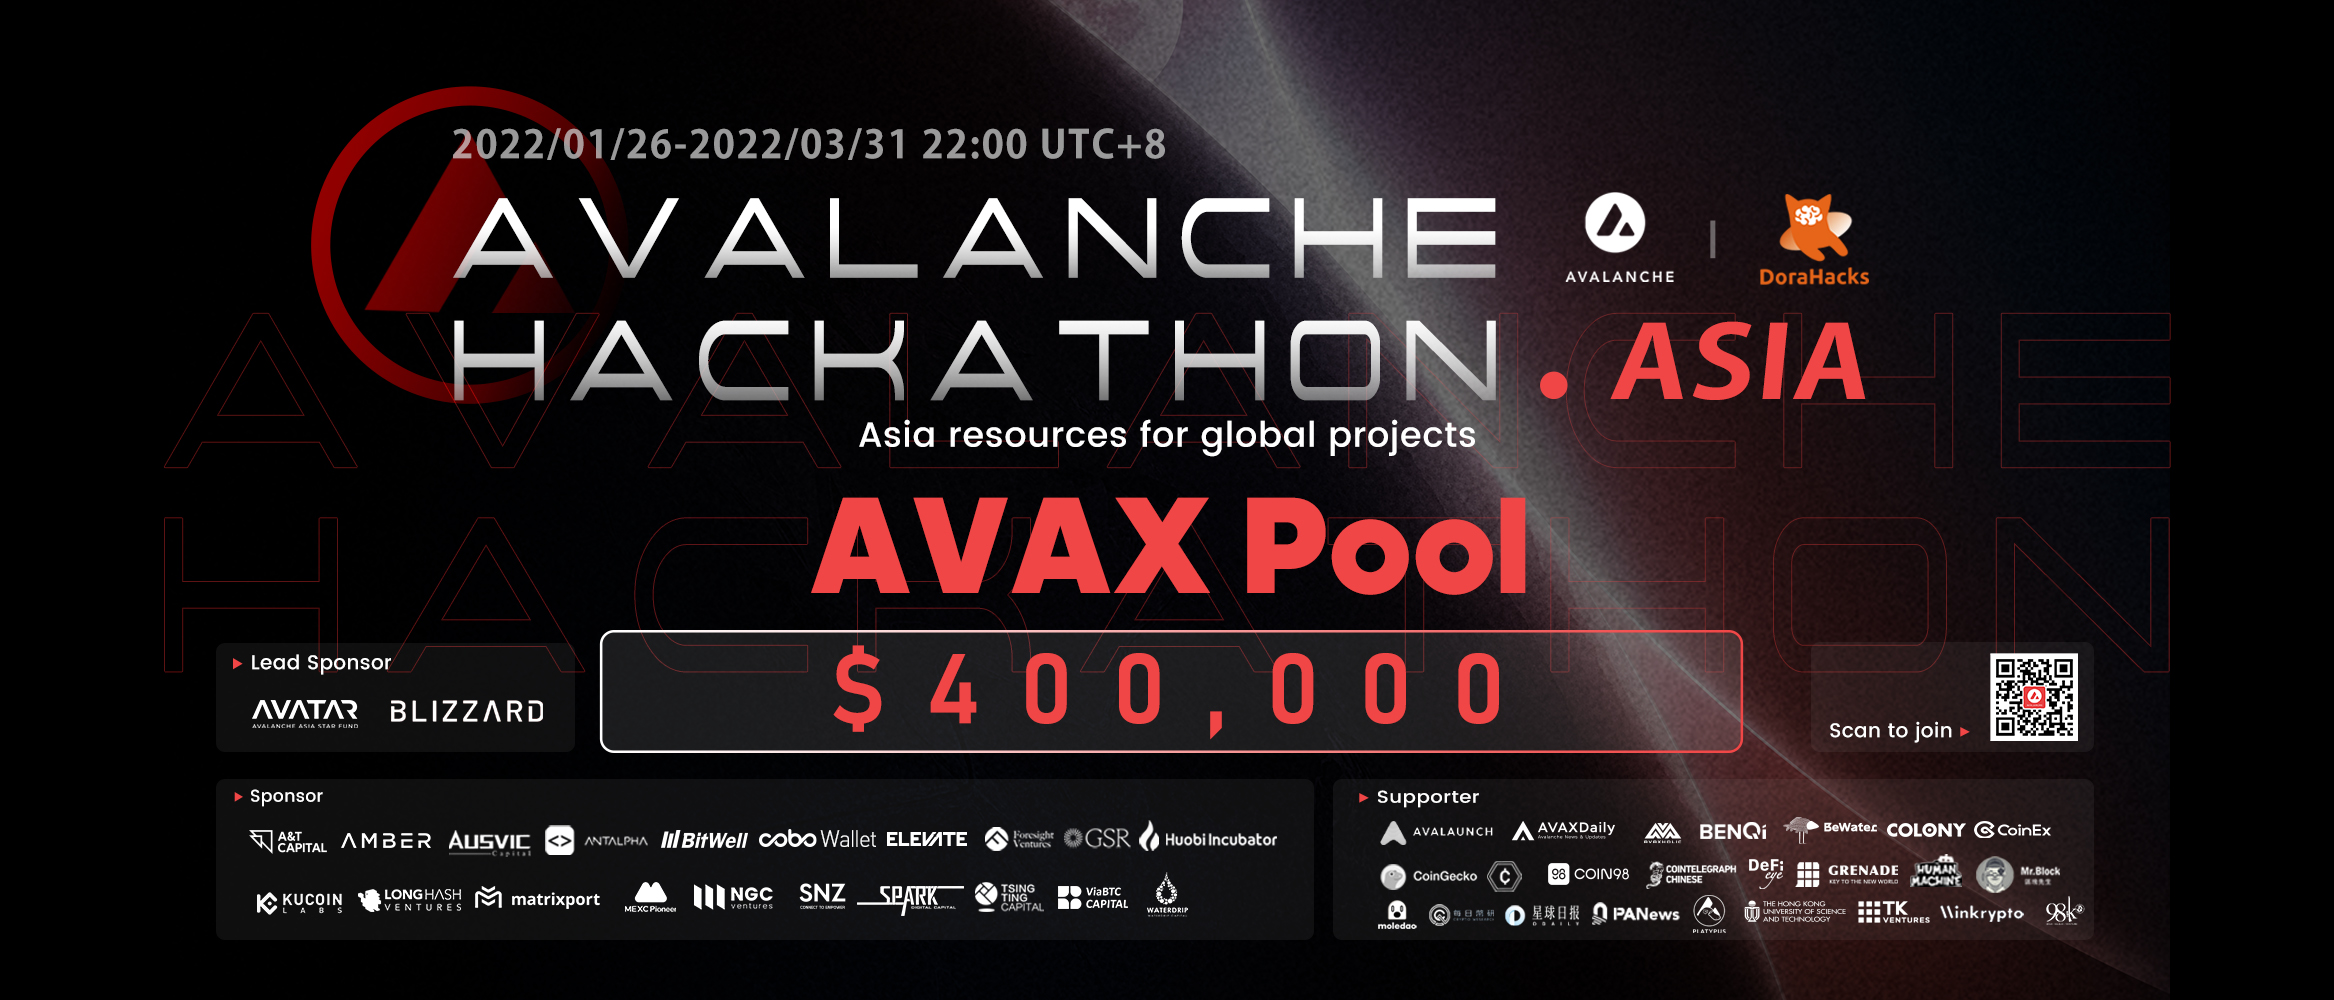 Avalanche Asia Hackathon